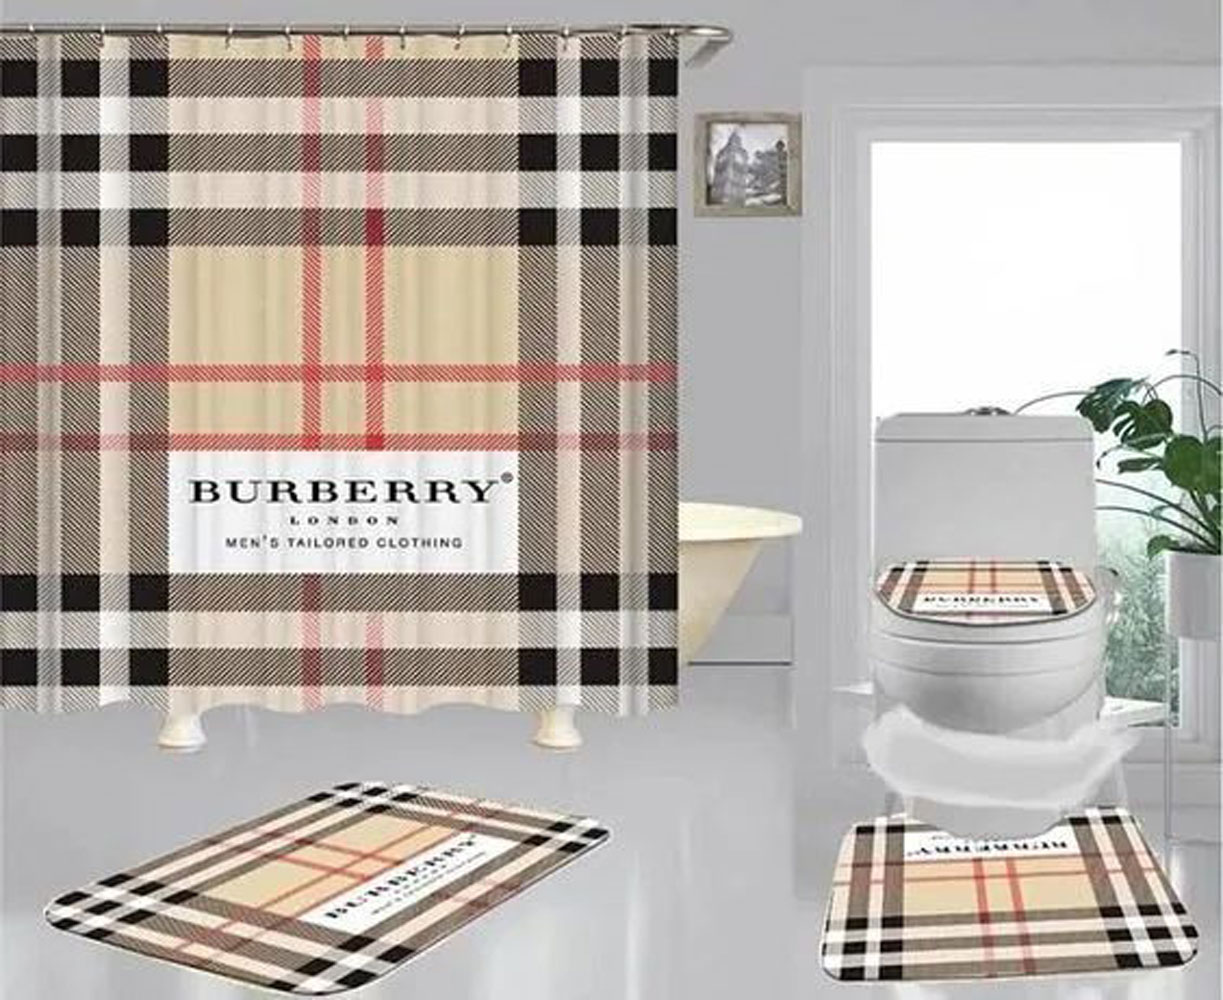 Burberry London Bathroom Set Home Decor Hypebeast Luxury Fashion Brand Bath Mat